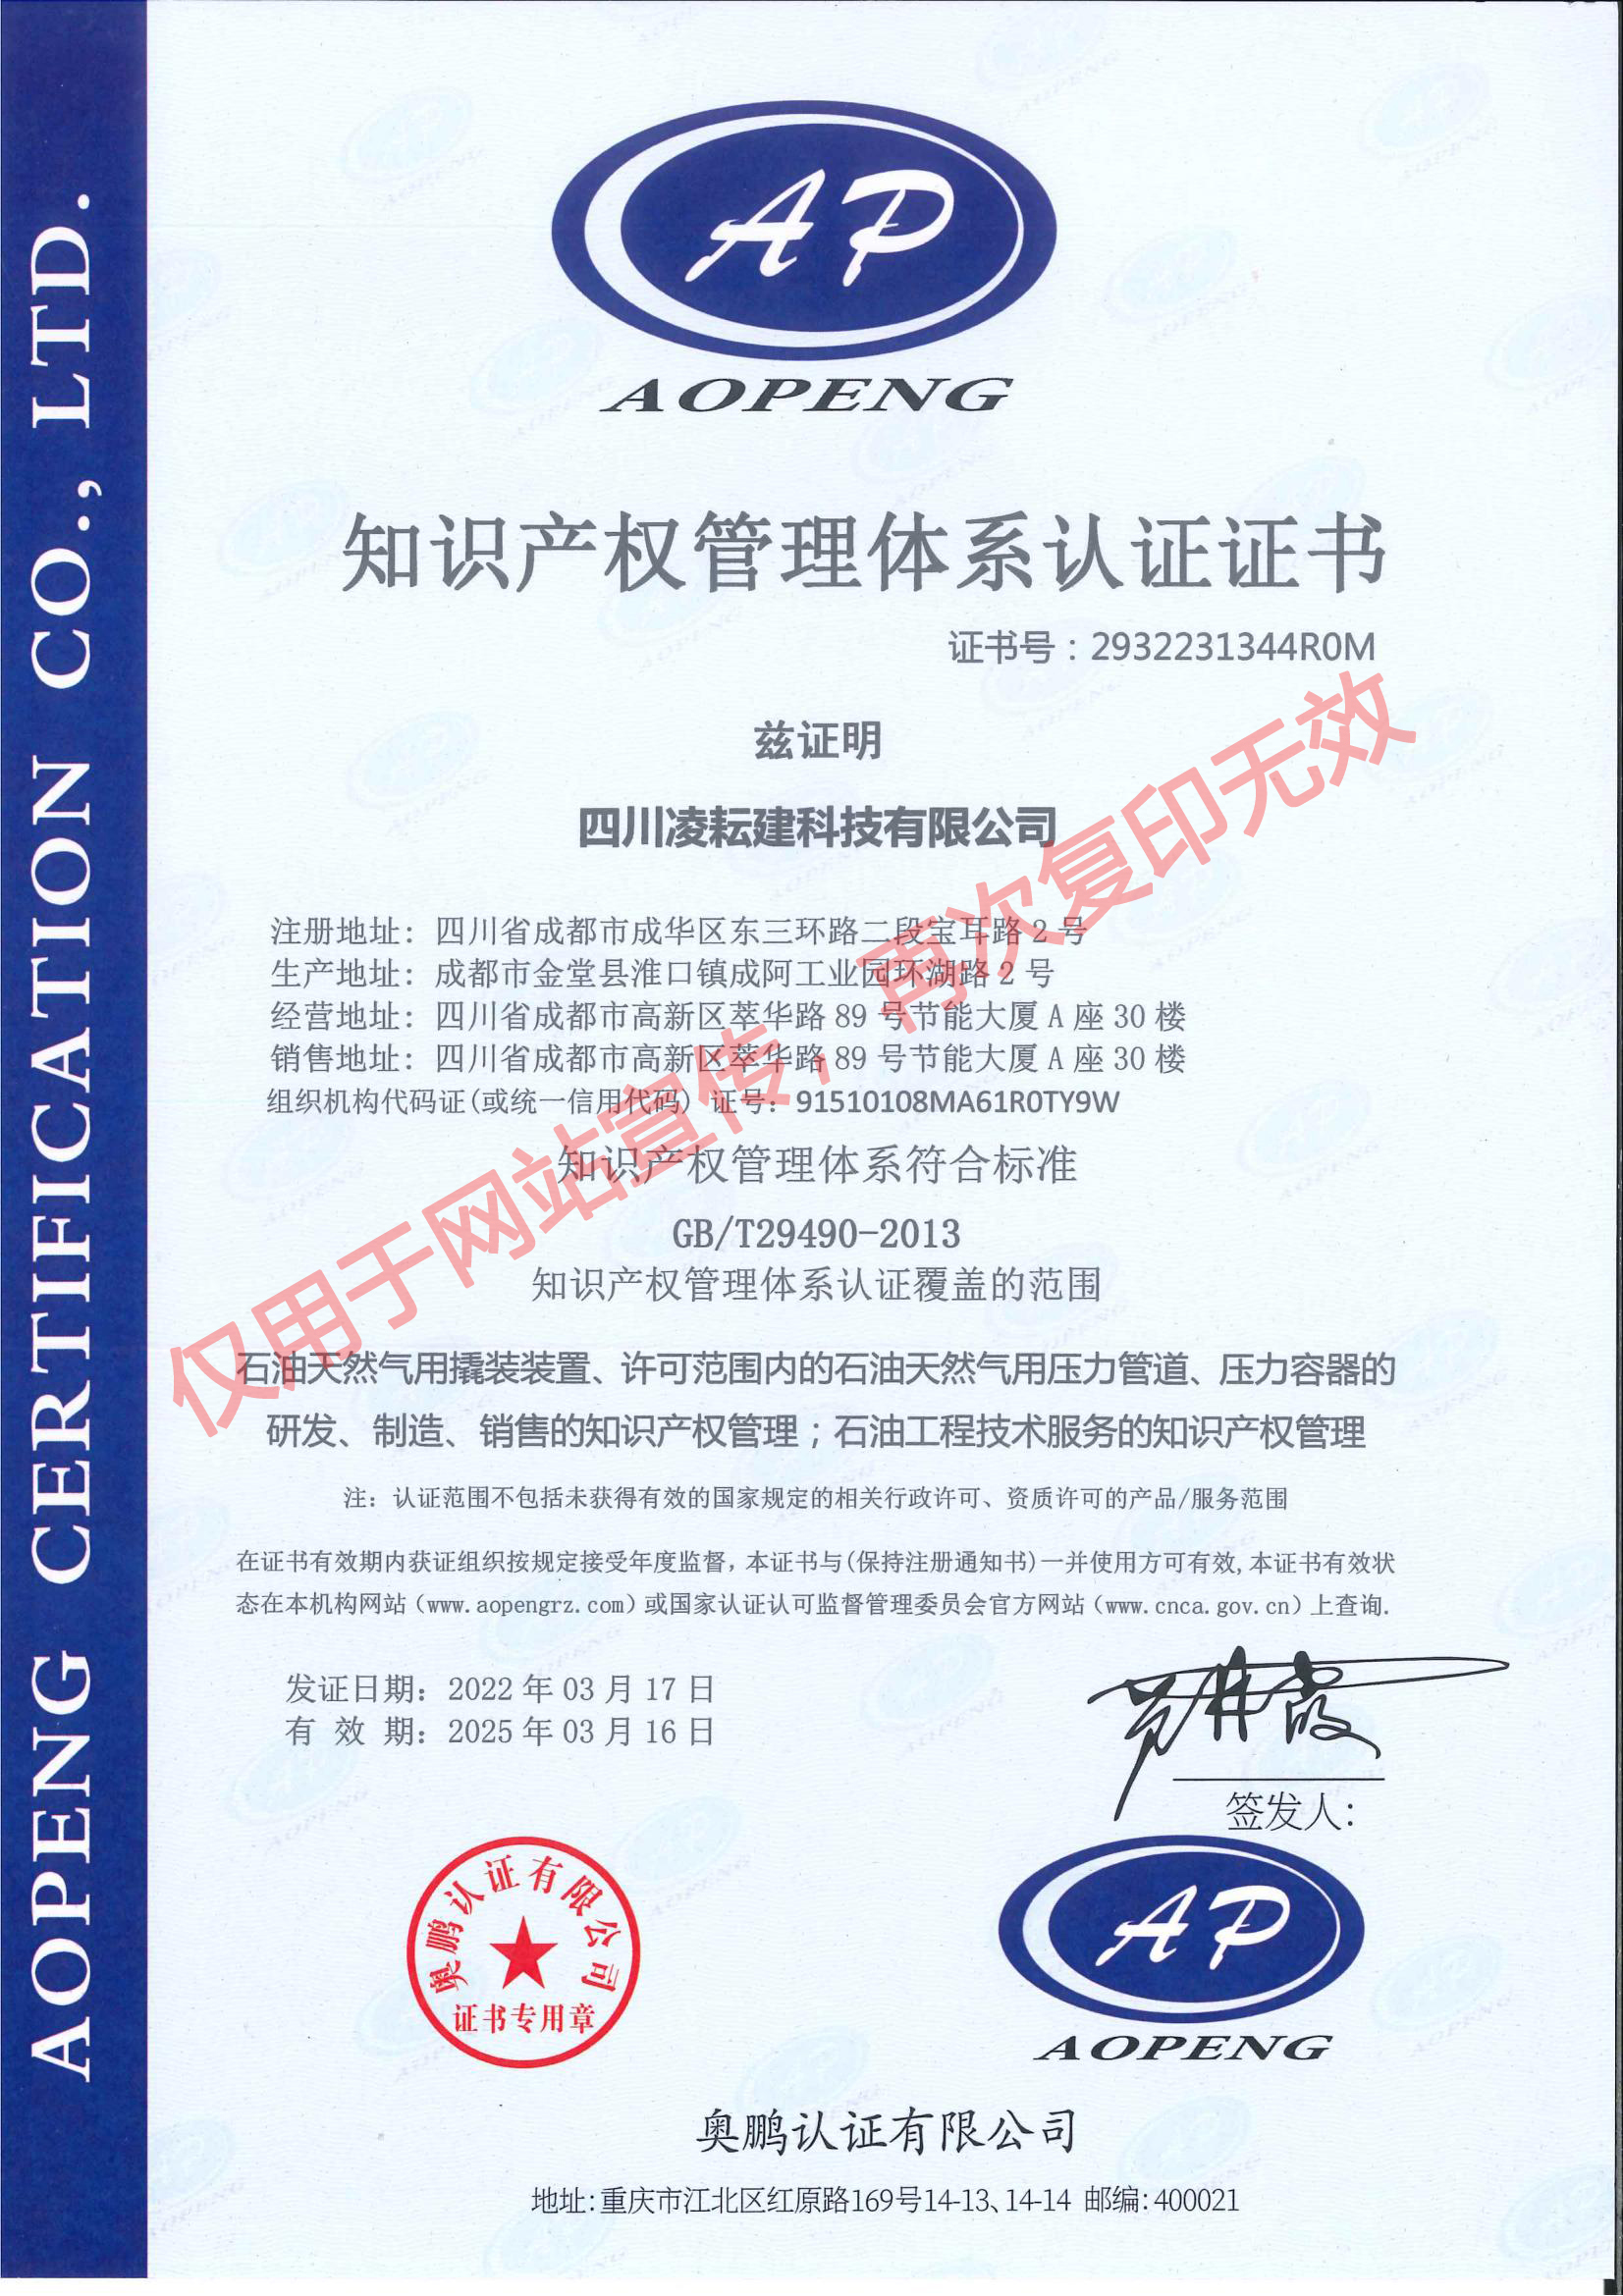 LYJ-018 知识产权管理体系认证证书（中英文）_00.jpg